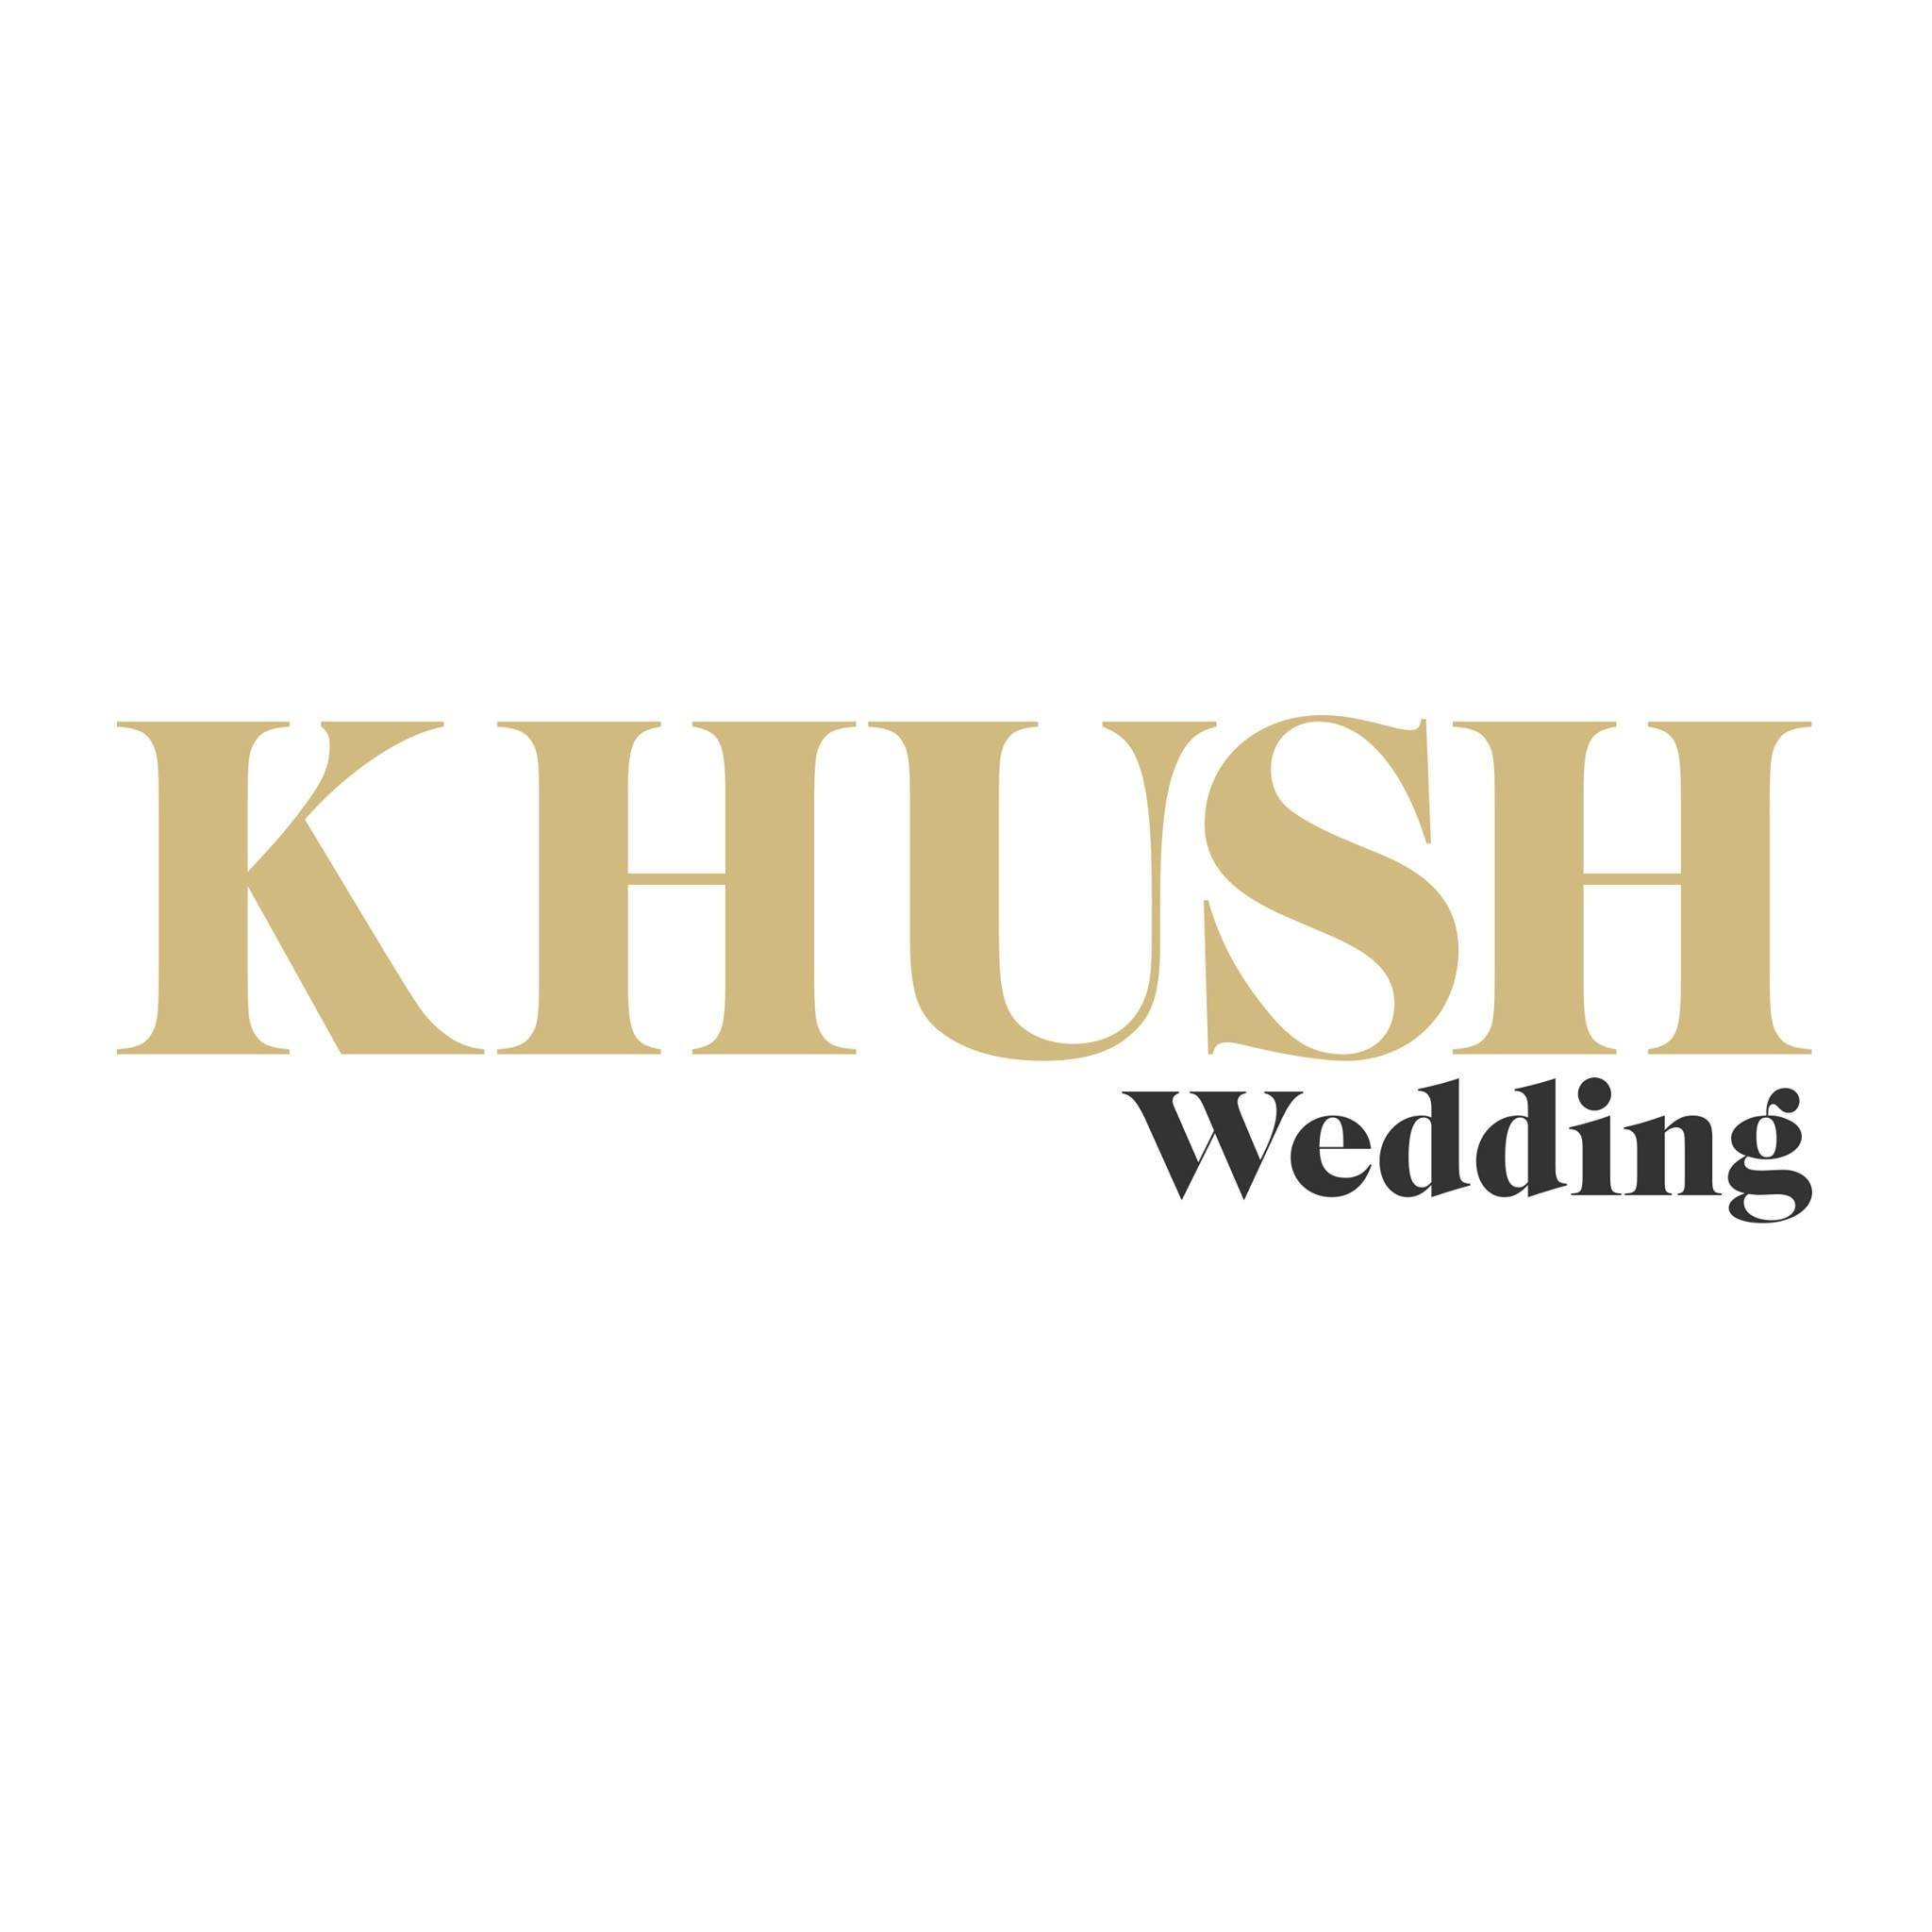 khushwedding